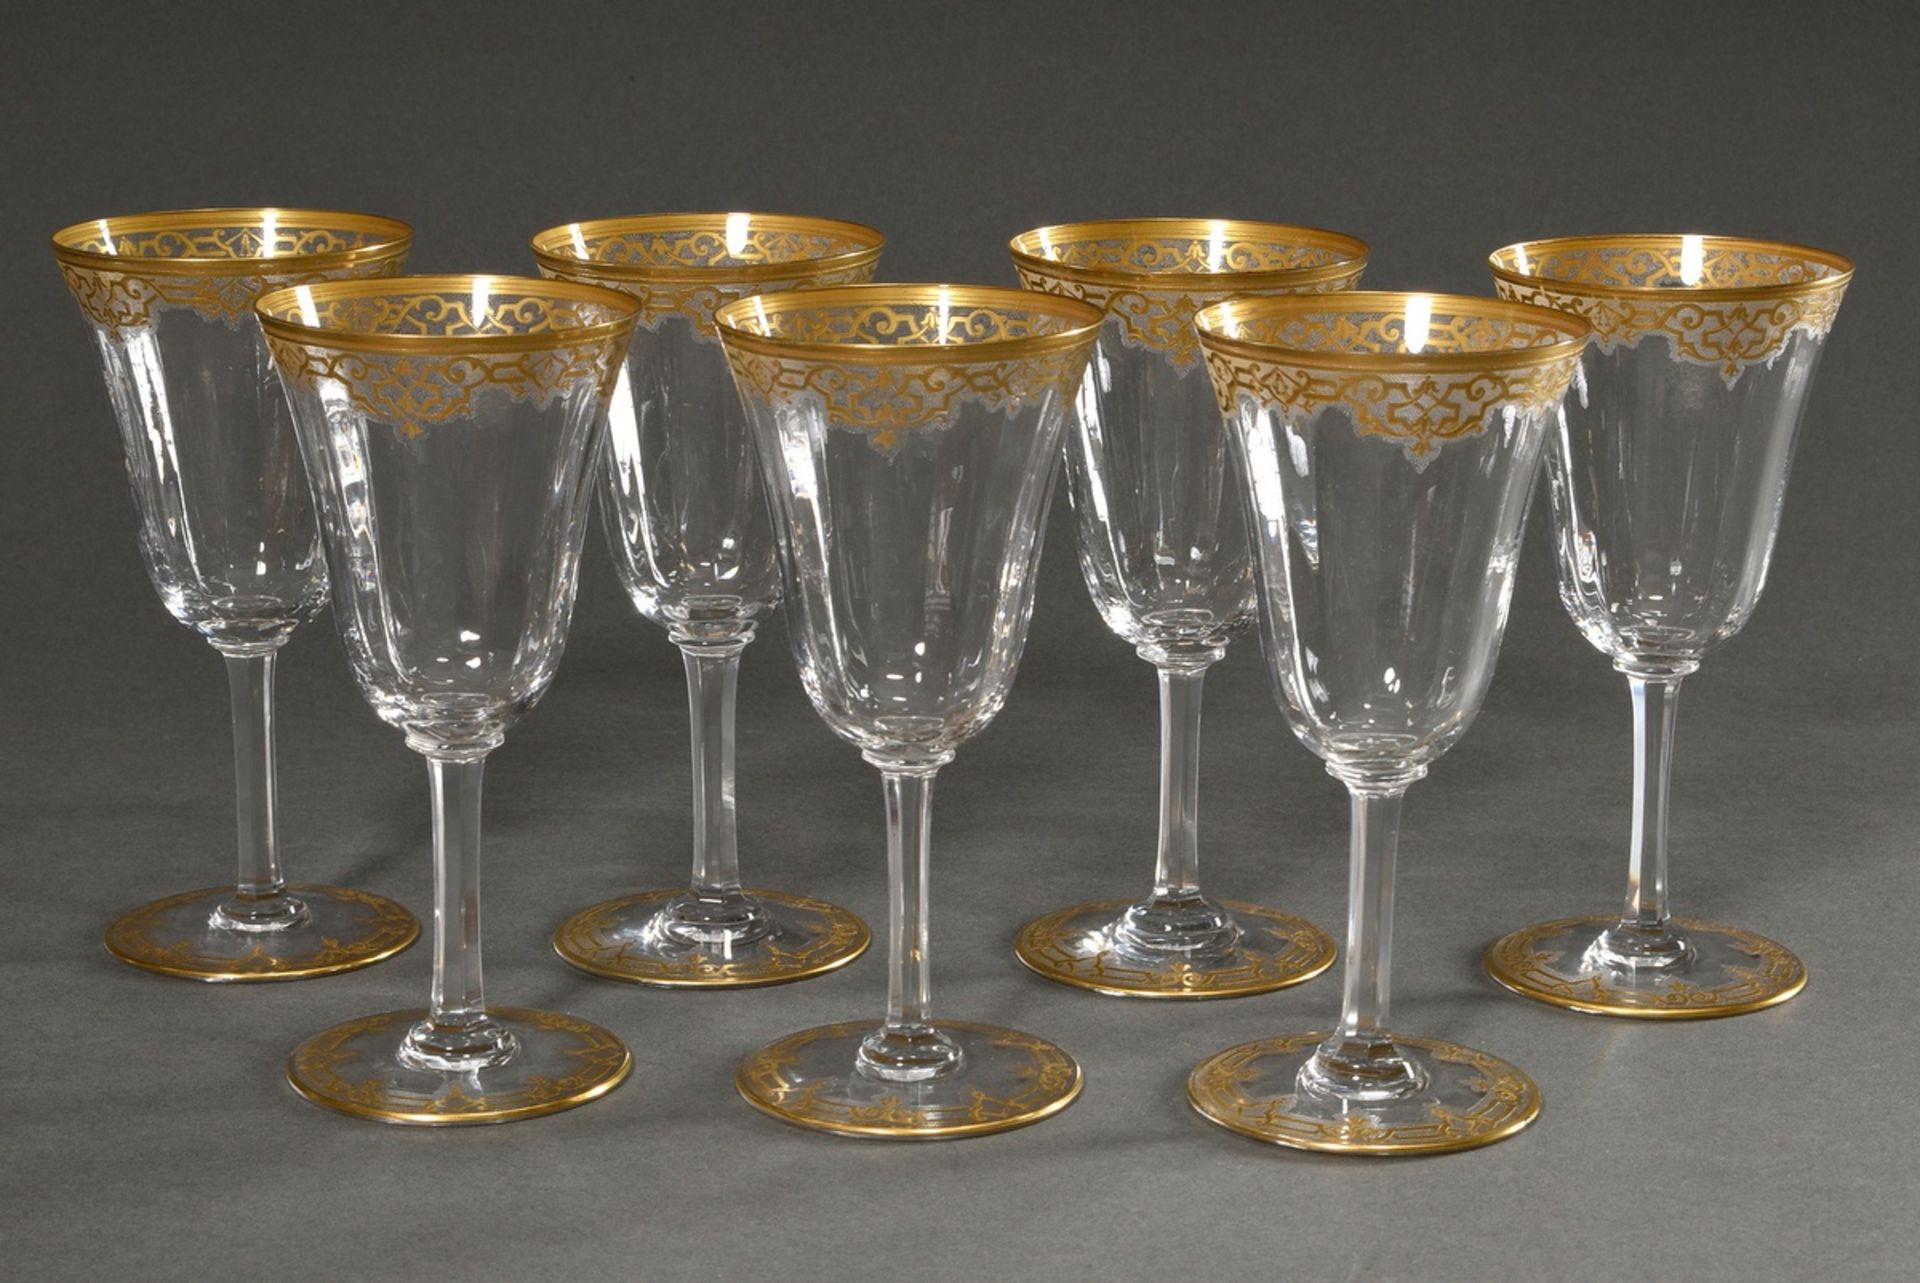 7 Gläser mit ornamentalem Goldrand in Saint Louis Art, H. 17,5cm